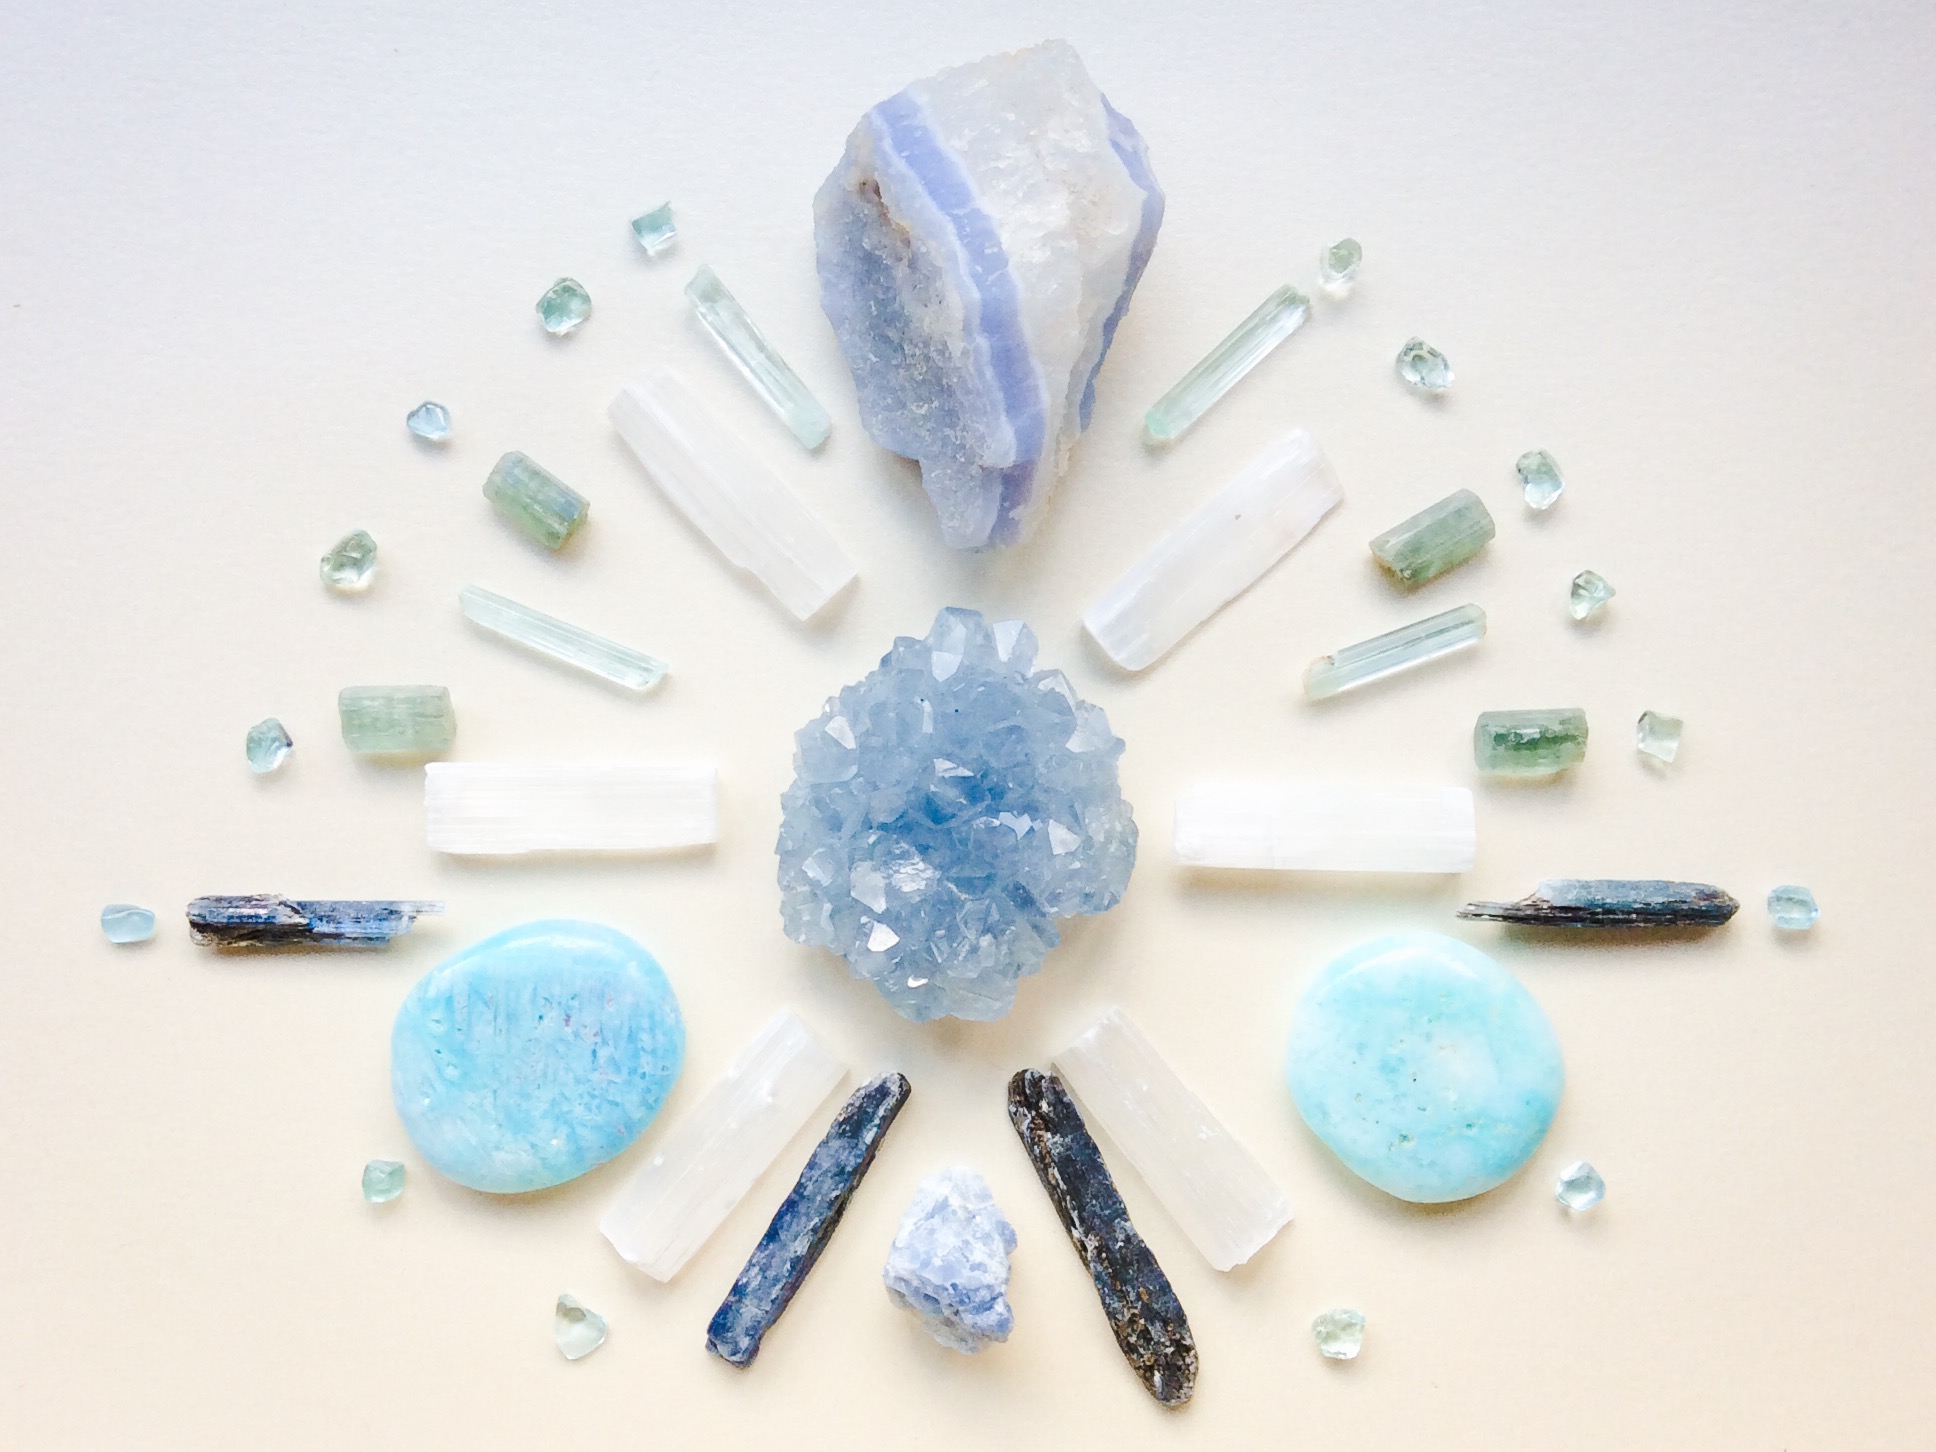 Blue Lace Agate, Celestine, Selenite, Kyanite, Aquamarine, Blue Calcite and Blue Aragonite